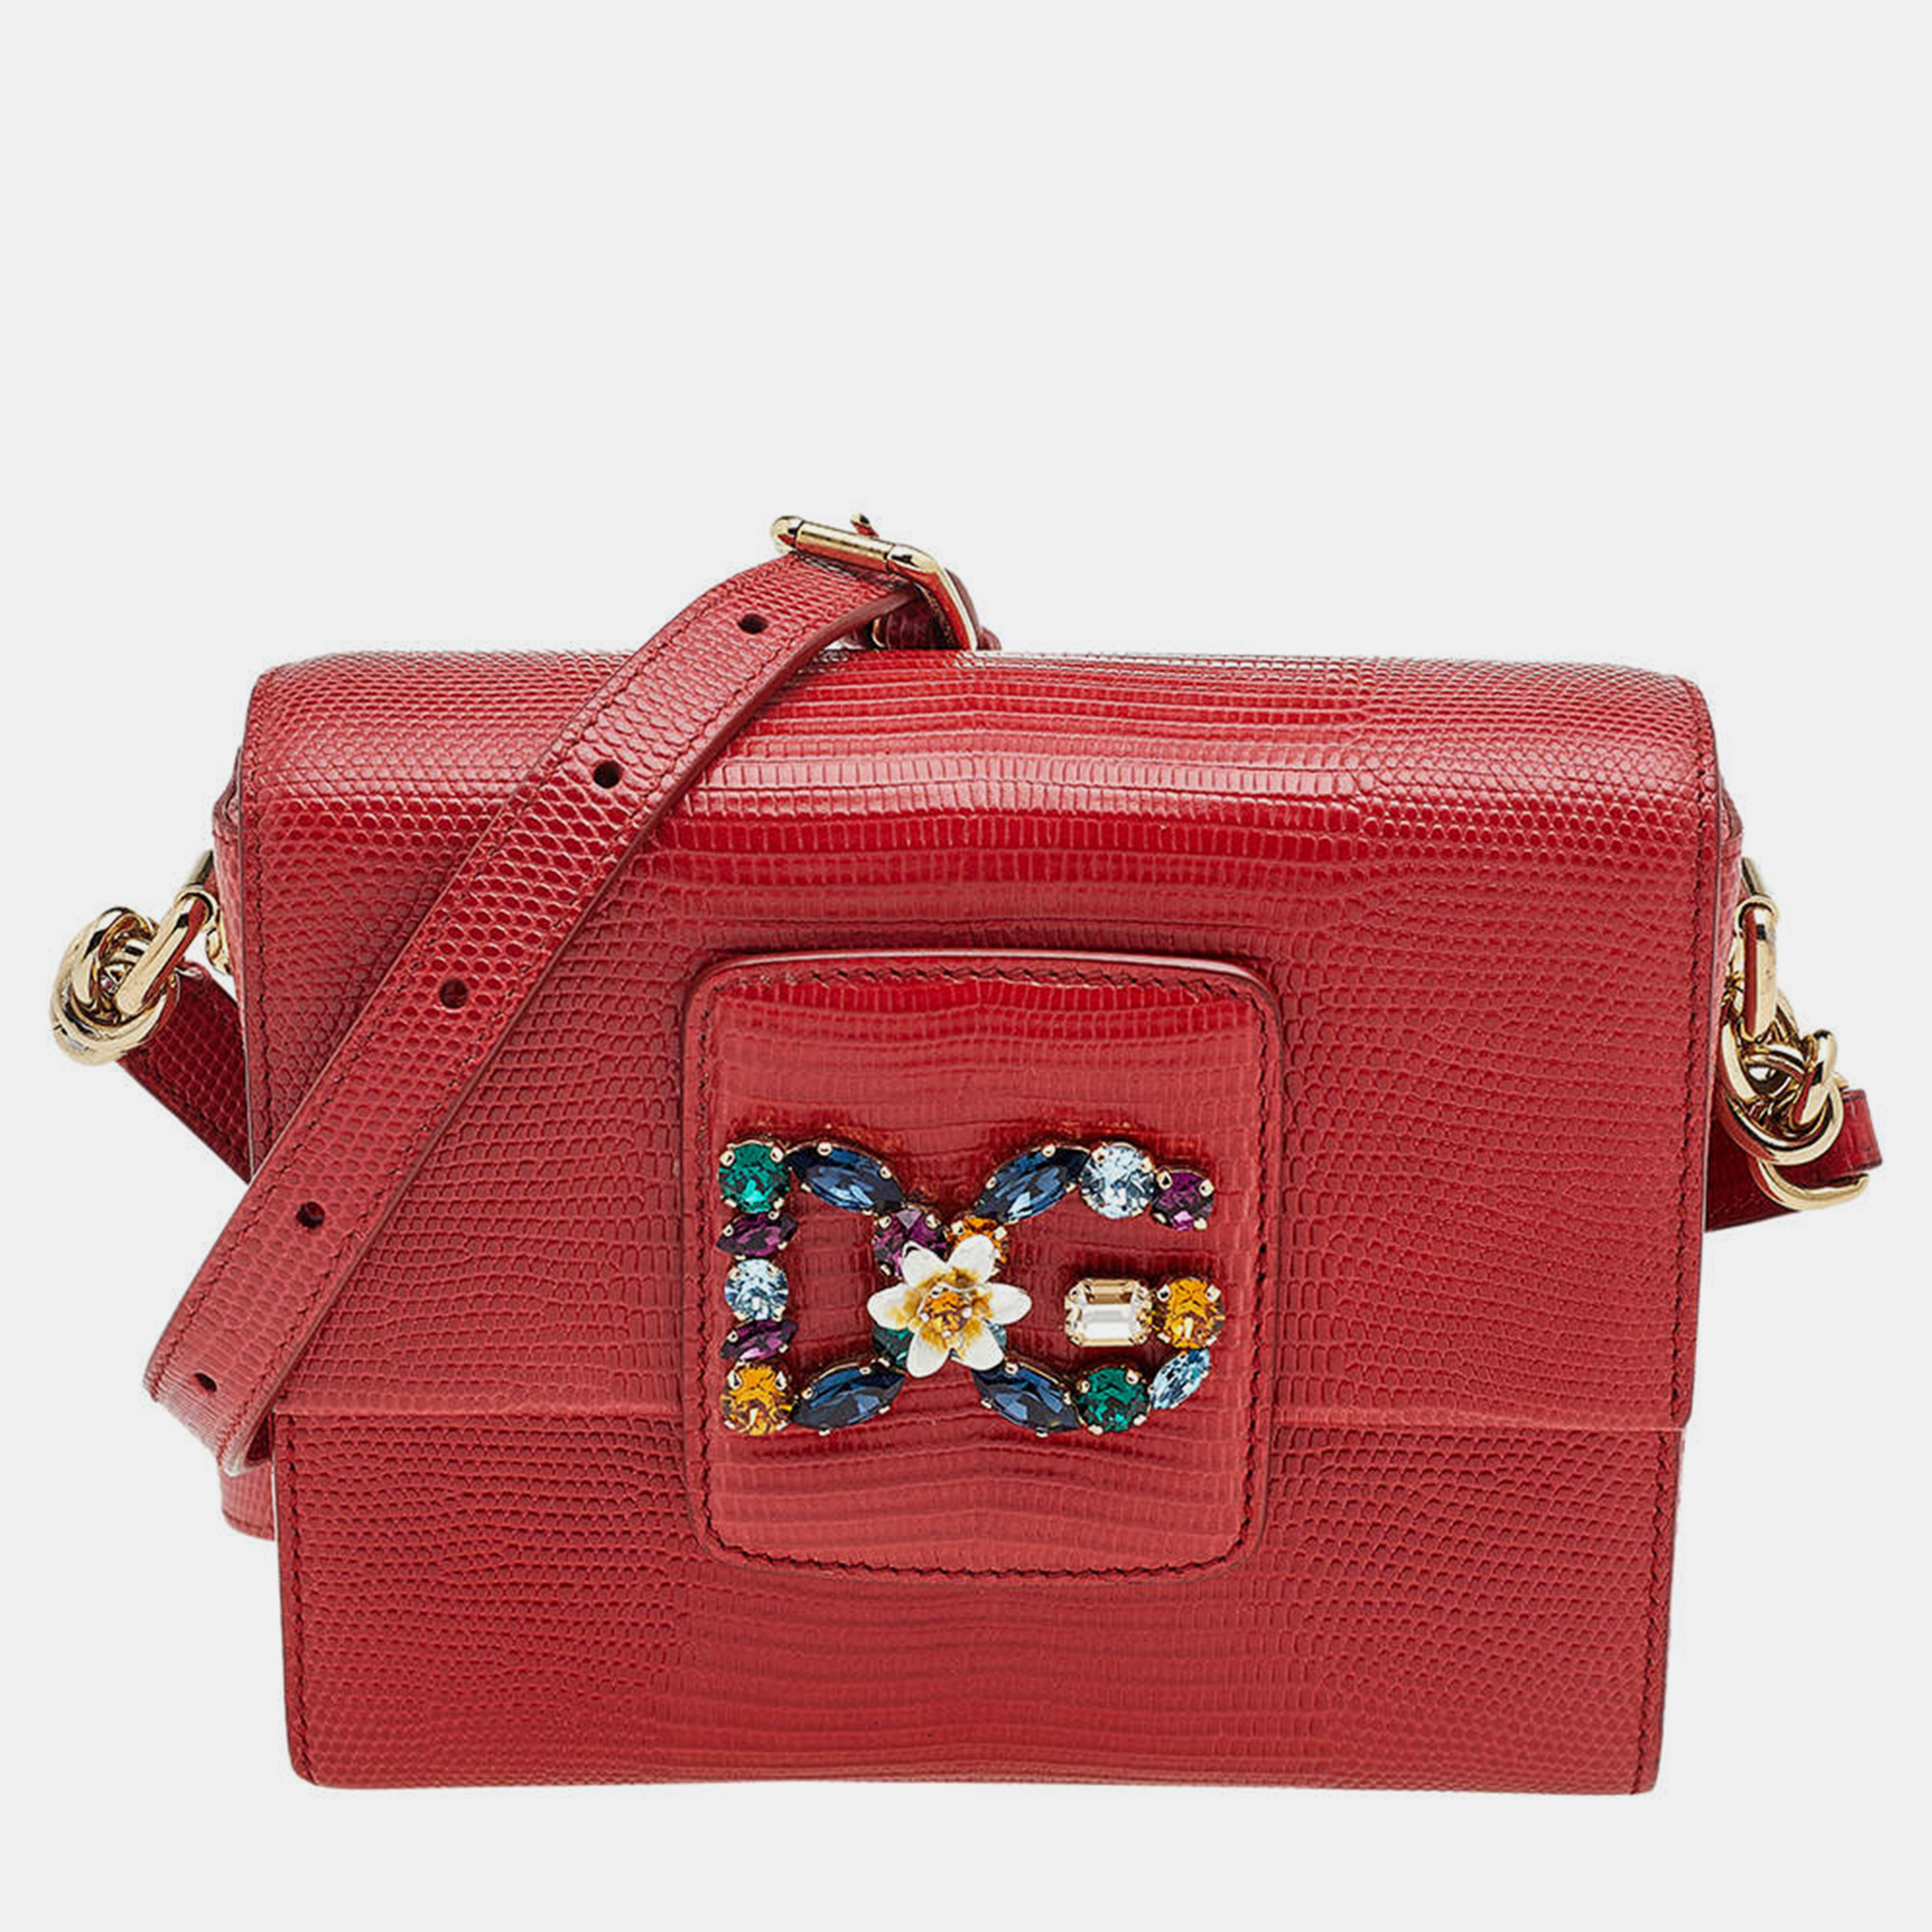 Dolce & Gabbana Red Lizard Embossed Leather DG Millennials Shoulder Bag